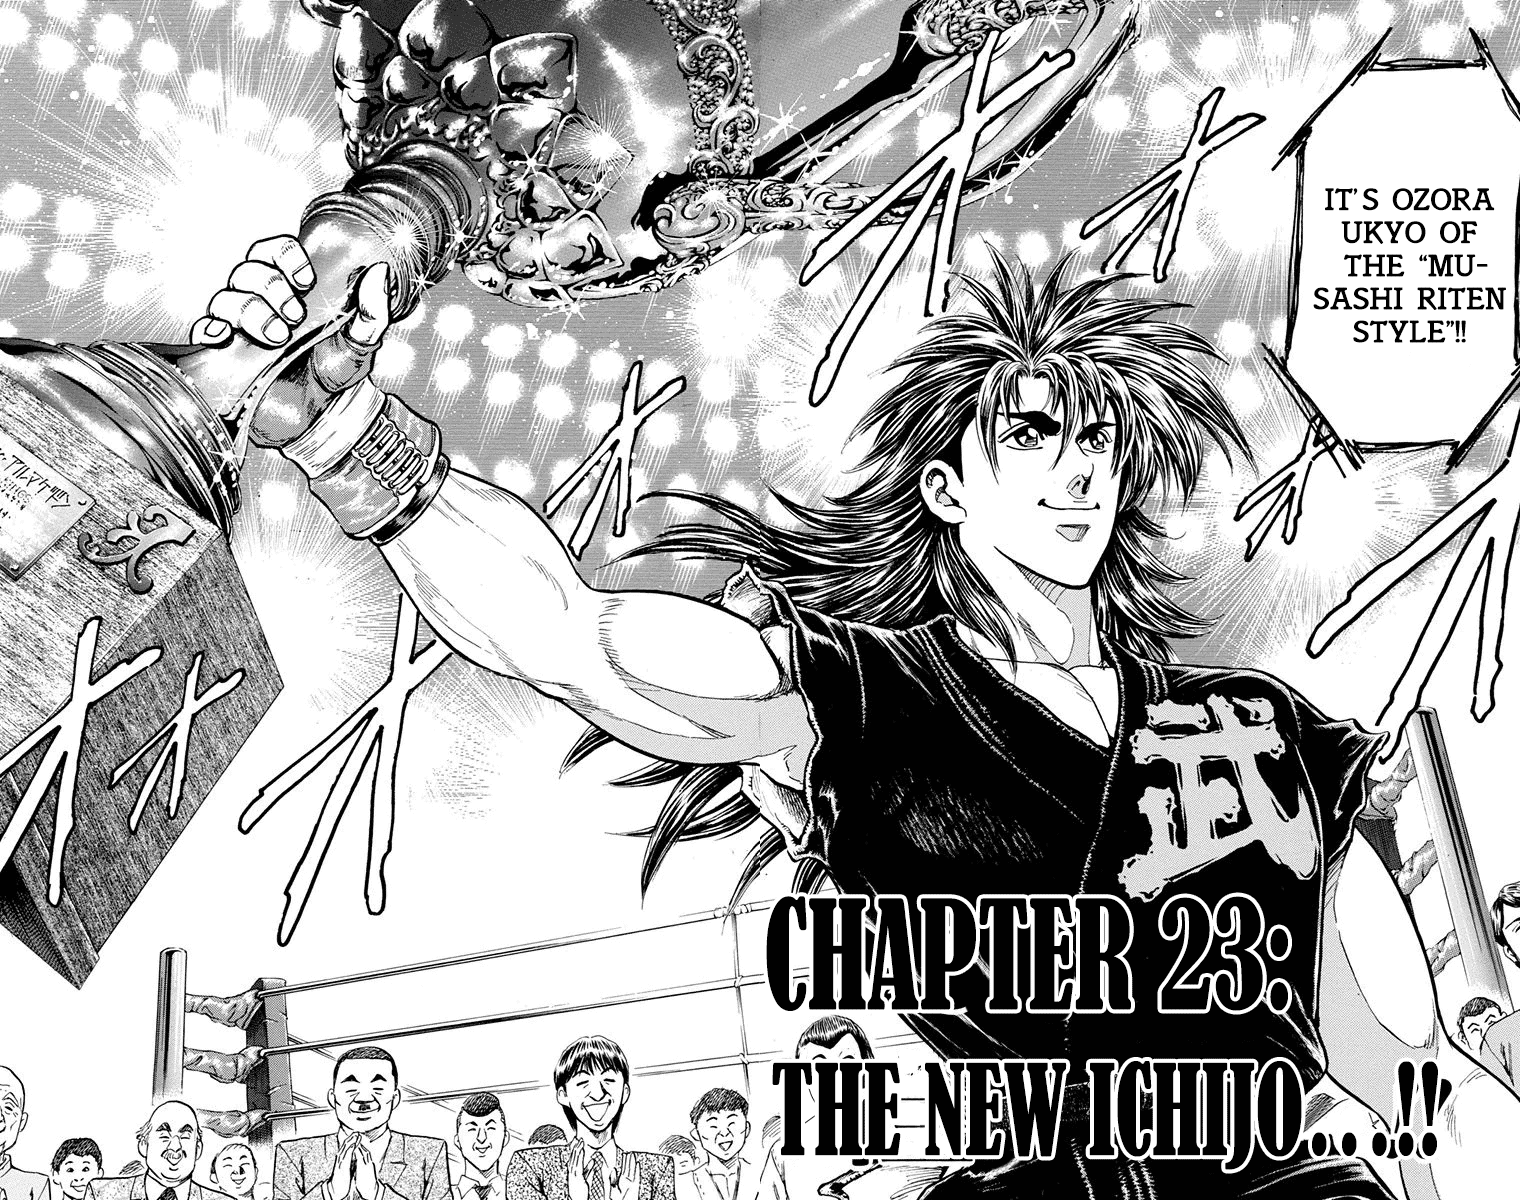 Ukyo No Ozora Vol.7 Chapter 23: The New Ichijo...!! - Picture 2